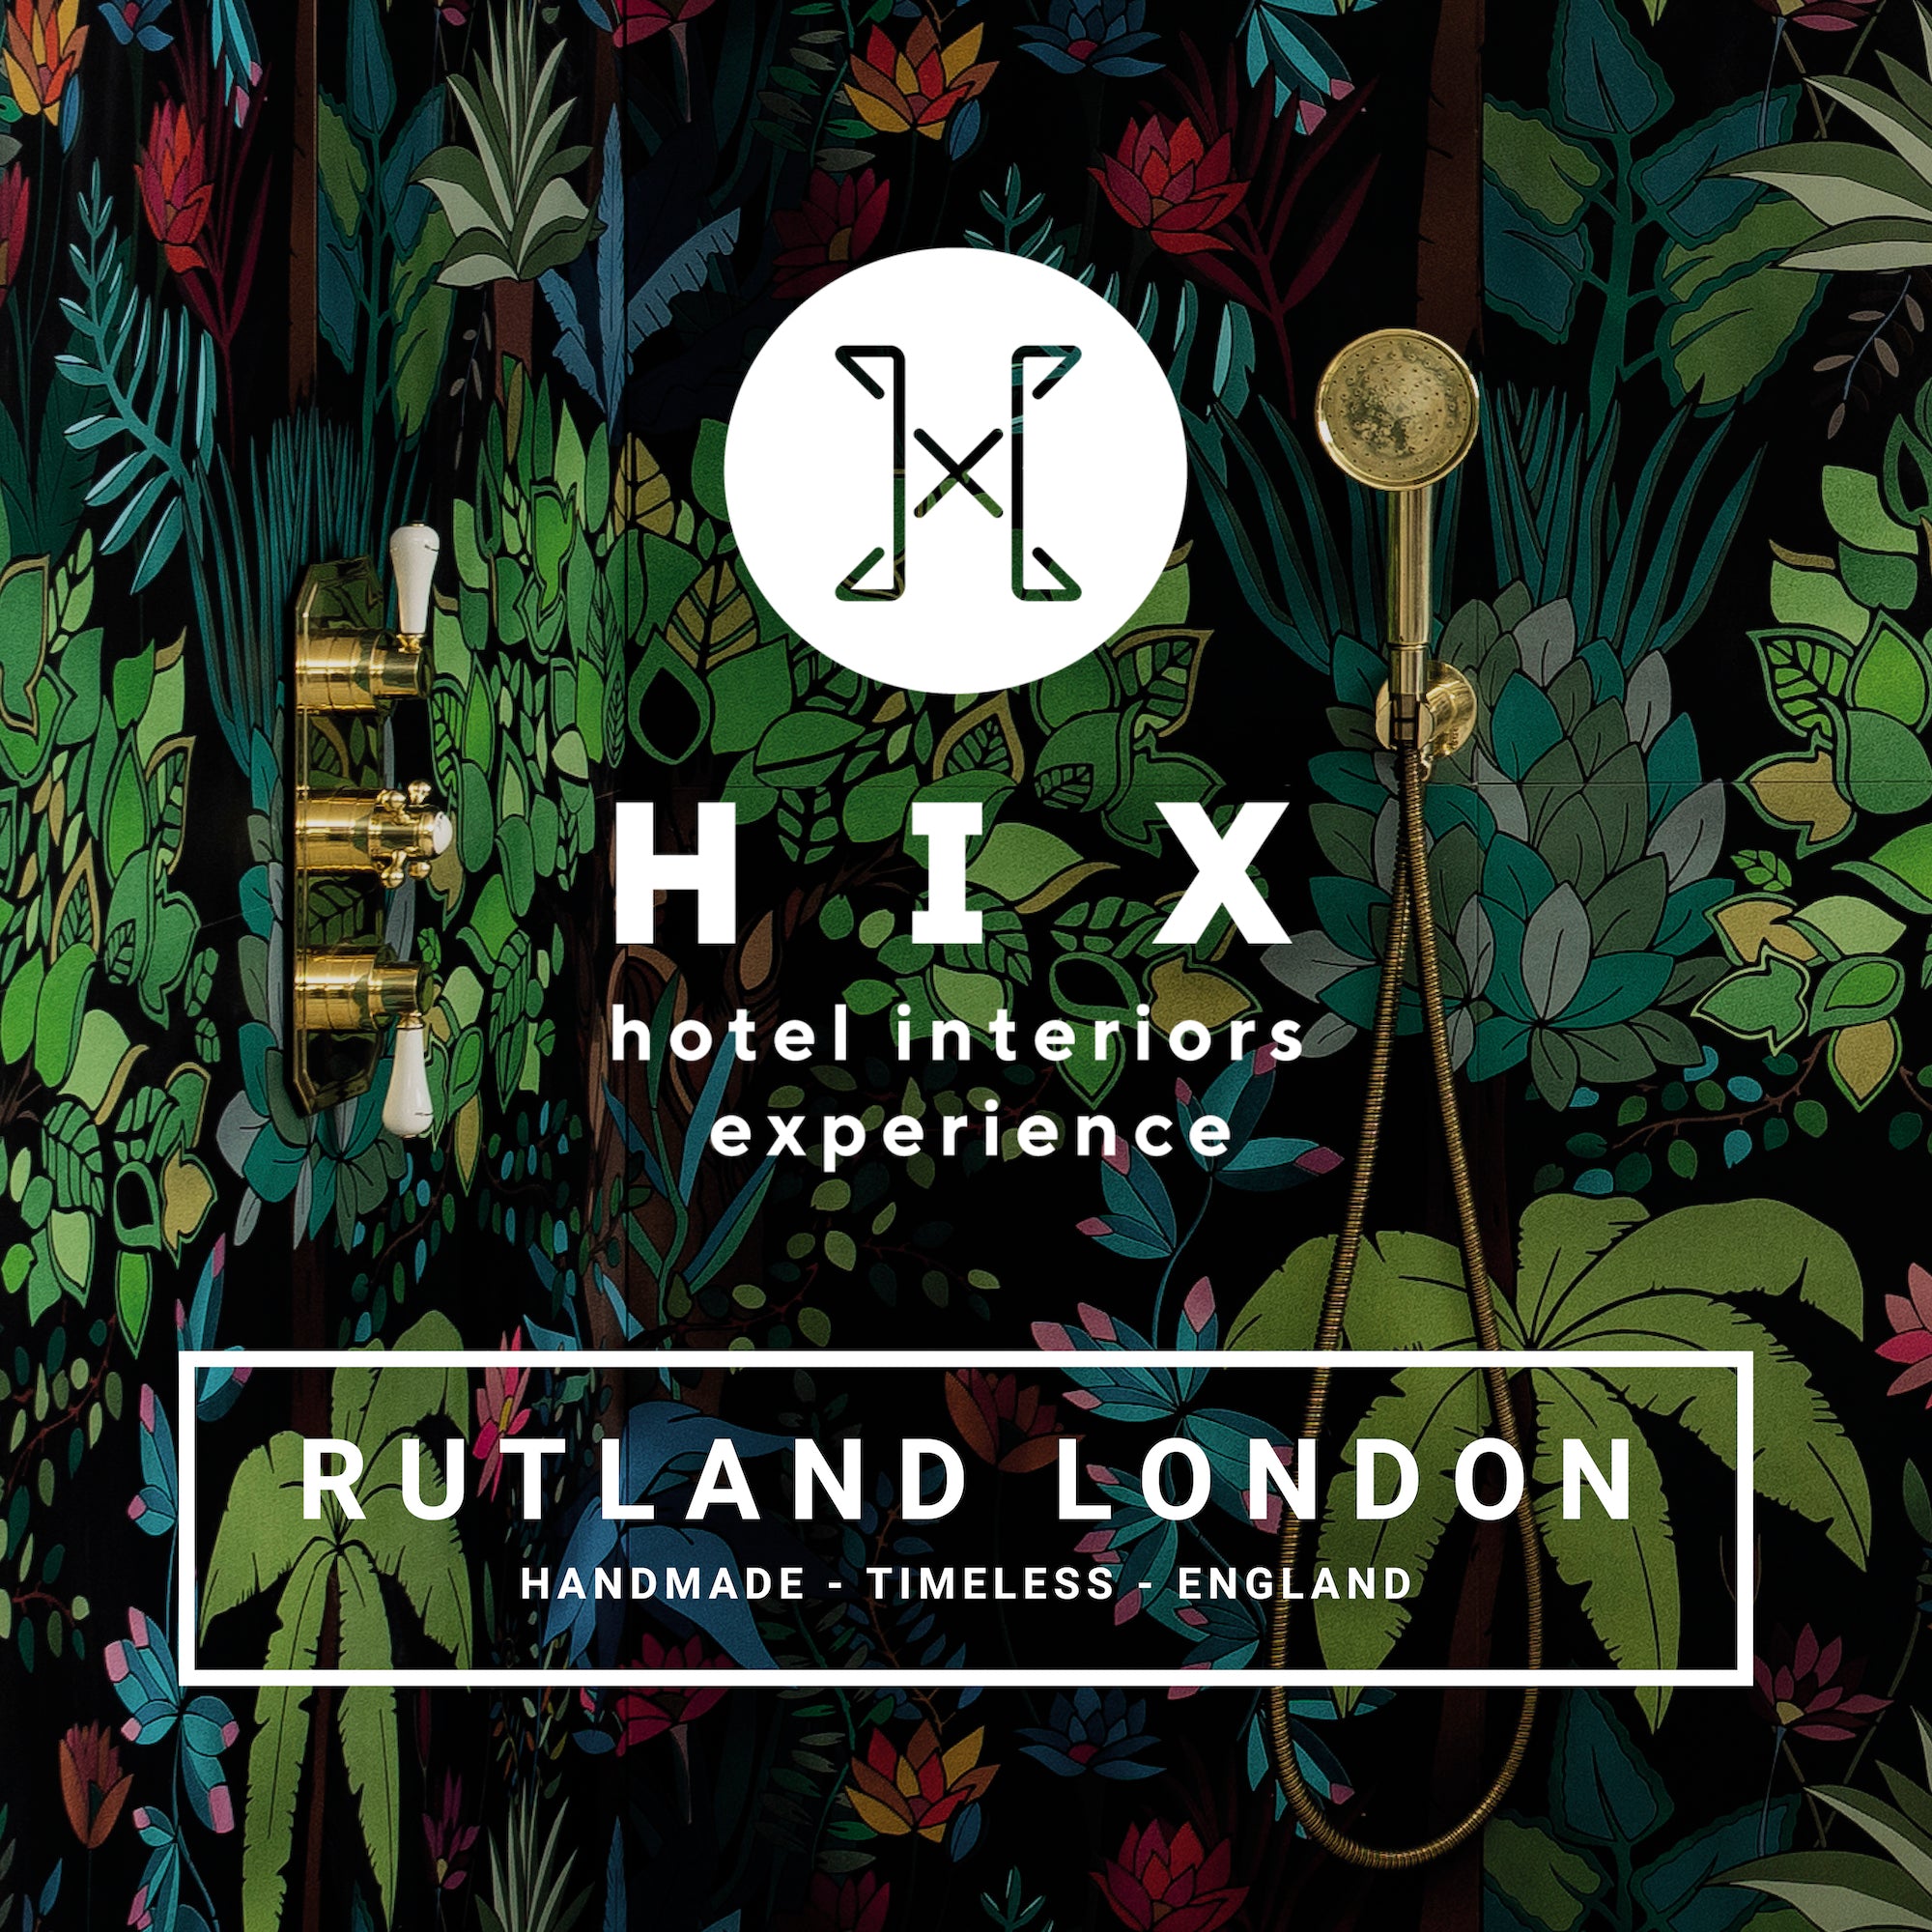 RL - Rutland London Attend HIX 2021